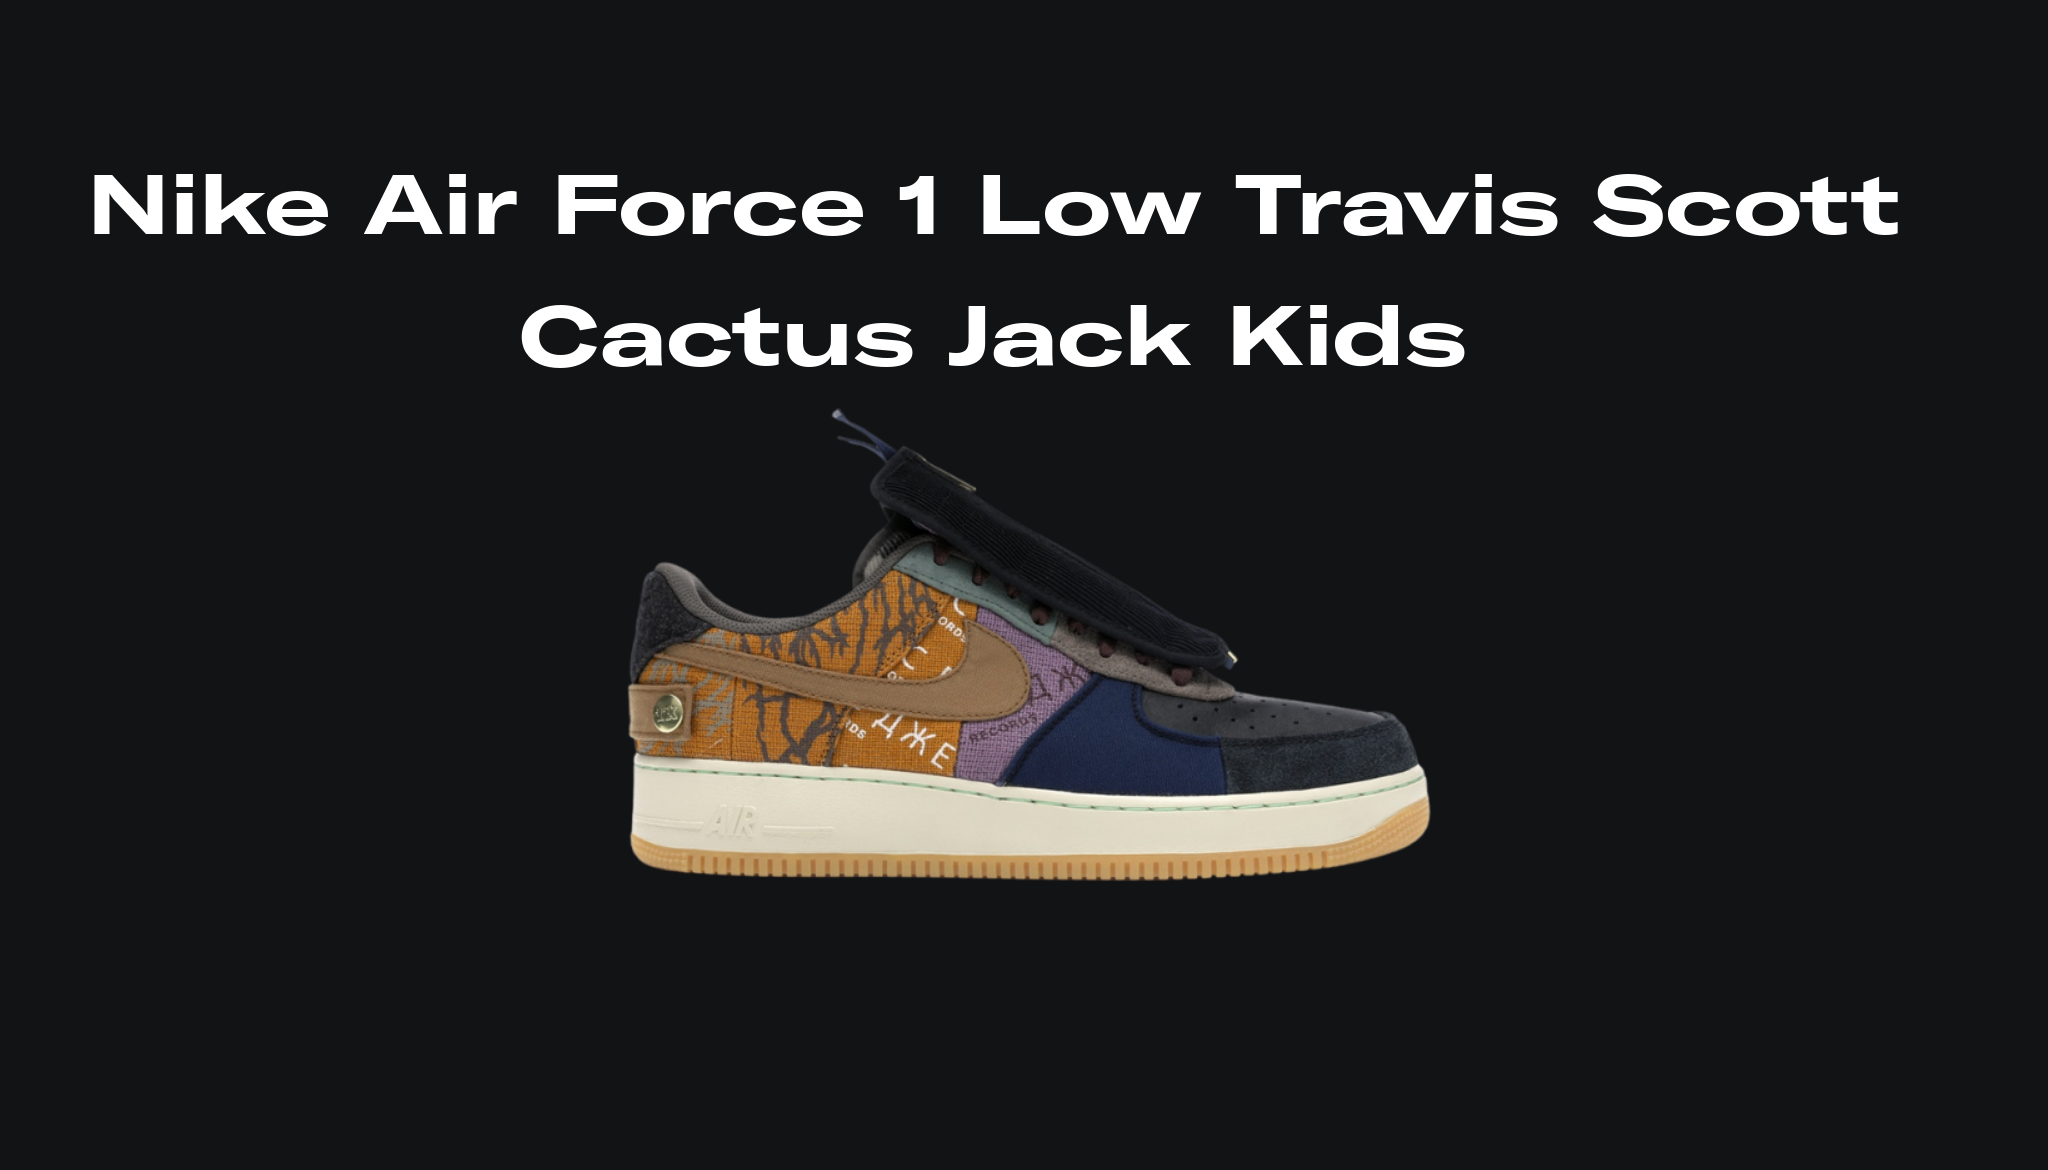 Nike Air Force 1 Low Travis Scott Cactus Jack Kids, Raffles and Release | Sole